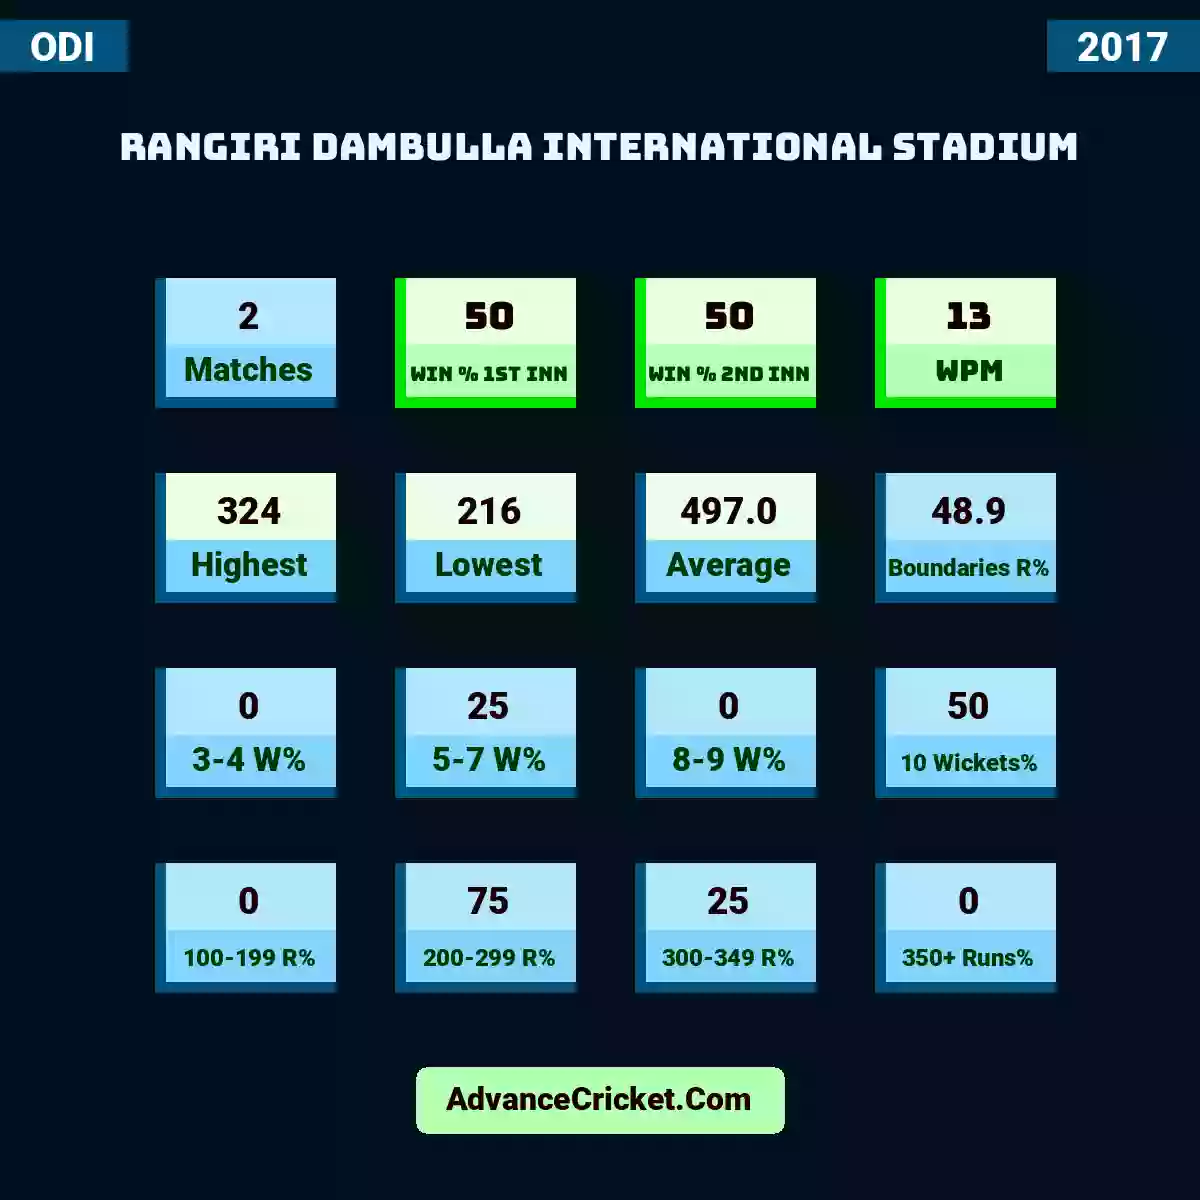 Image showing Rangiri Dambulla International Stadium with Matches: 2, Win % 1st Inn: 50, Win % 2nd Inn: 50, WPM: 13, Highest: 324, Lowest: 216, Average: 497.0, Boundaries R%: 48.9, 3-4 W%: 0, 5-7 W%: 25, 8-9 W%: 0, 10 Wickets%: 50, 100-199 R%: 0, 200-299 R%: 75, 300-349 R%: 25, 350+ Runs%: 0.